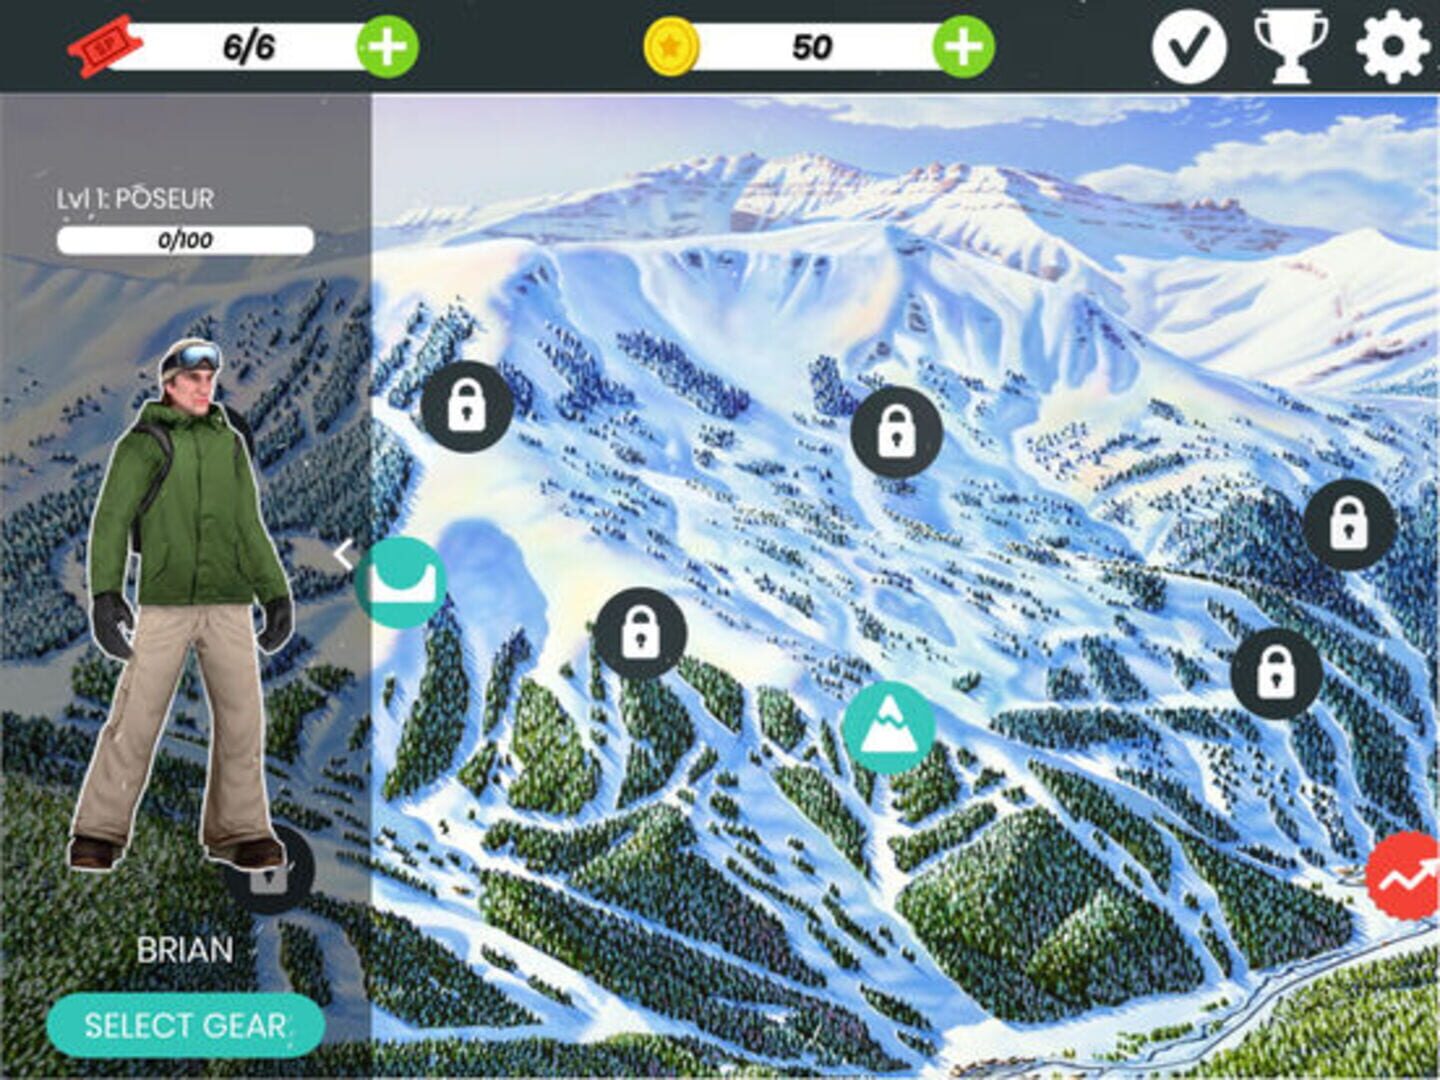 Snowboard Party: Aspen screenshots